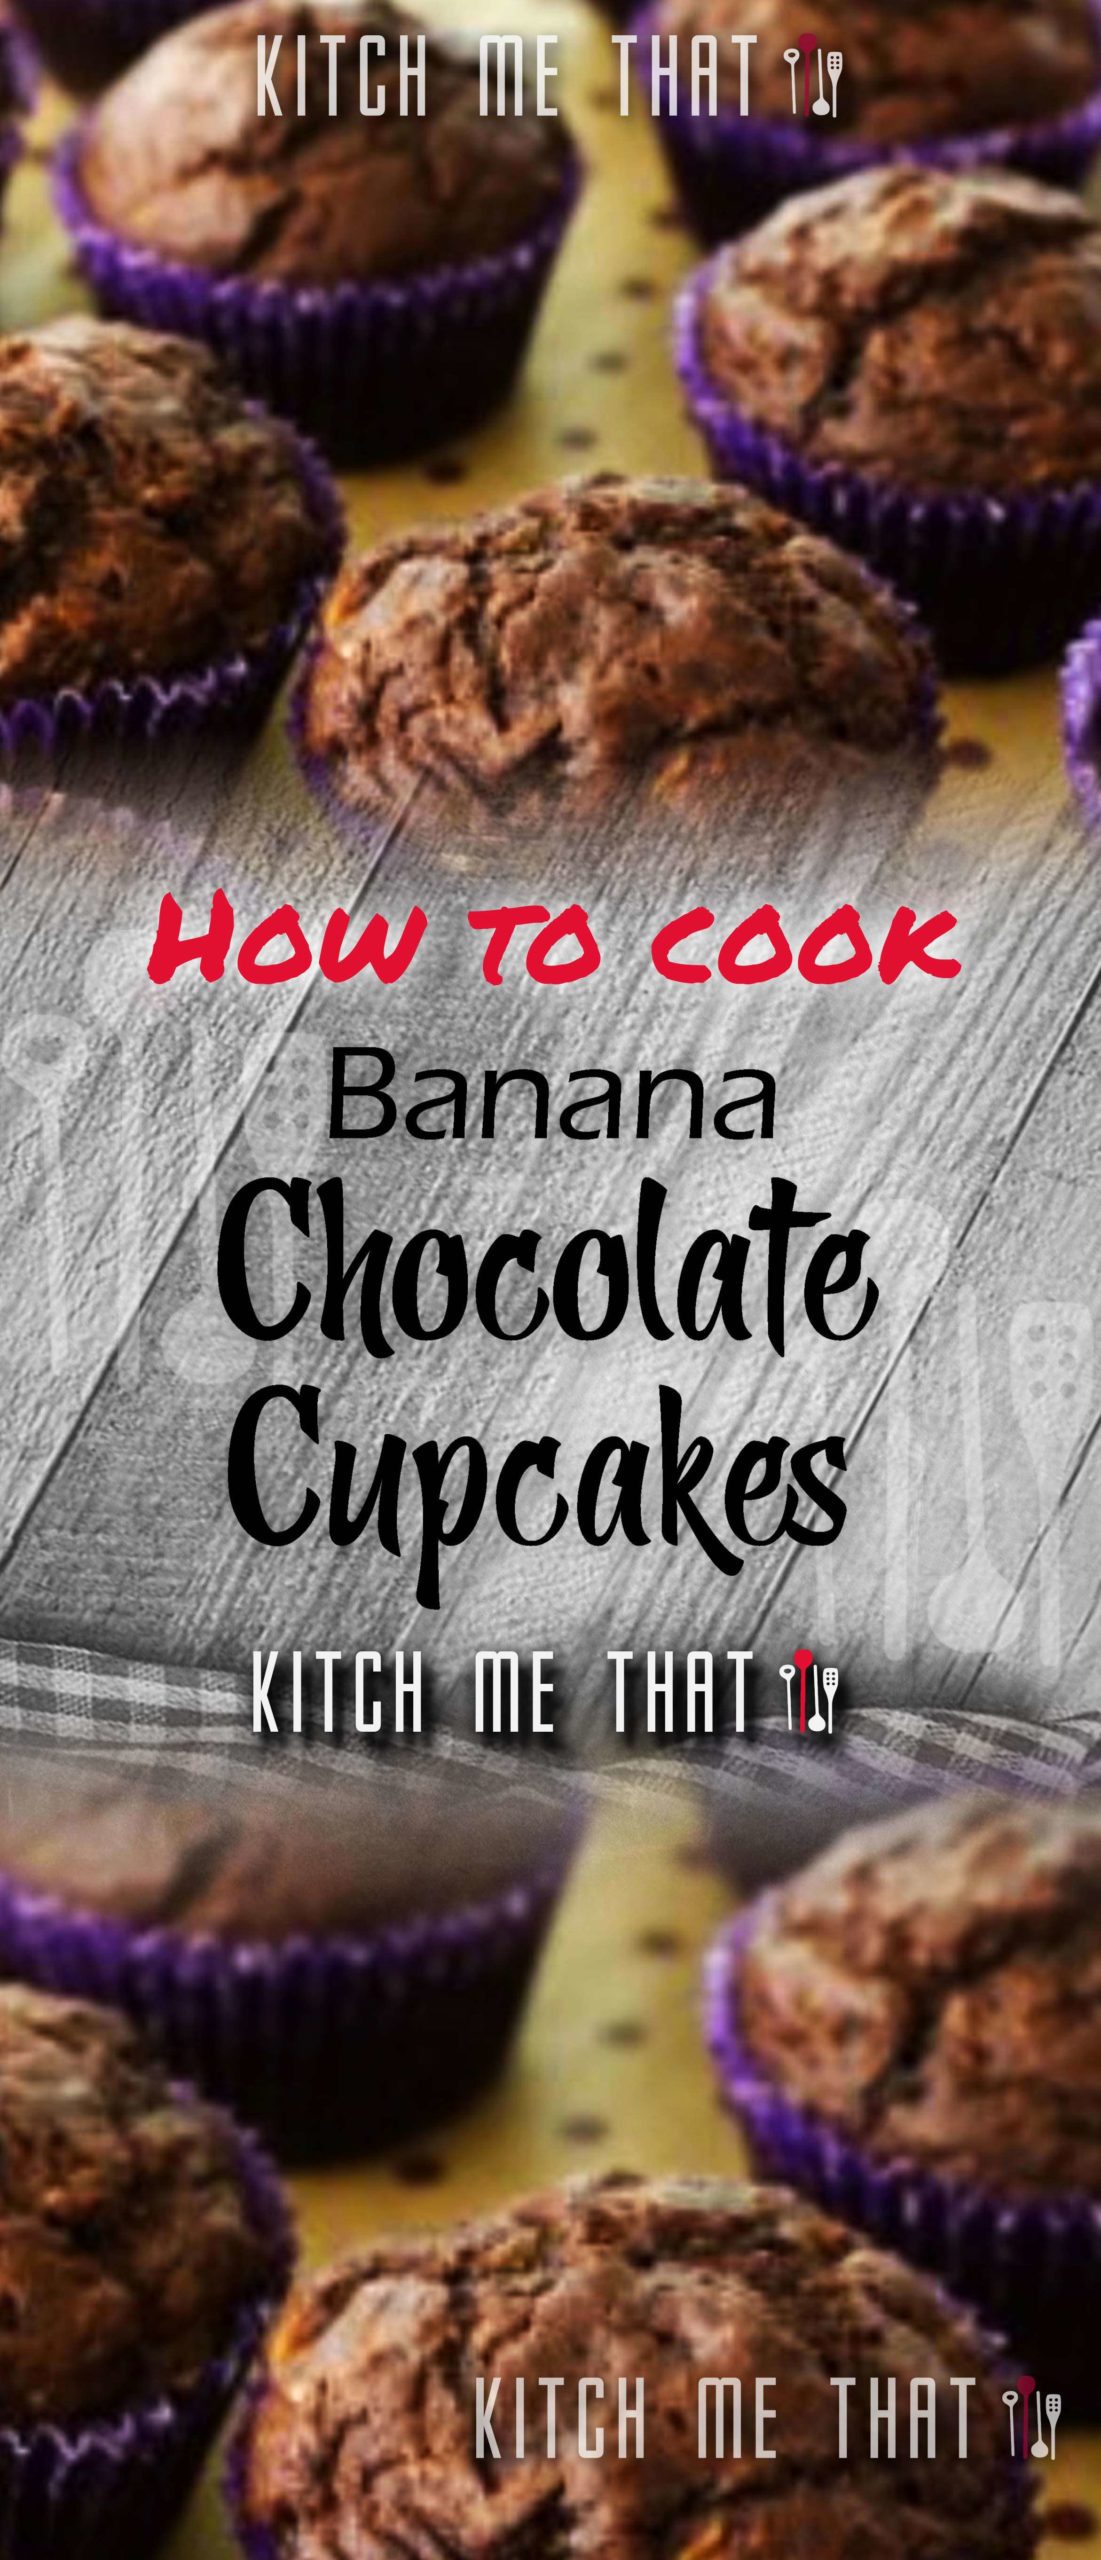 Banana Chocolate Cupcakes